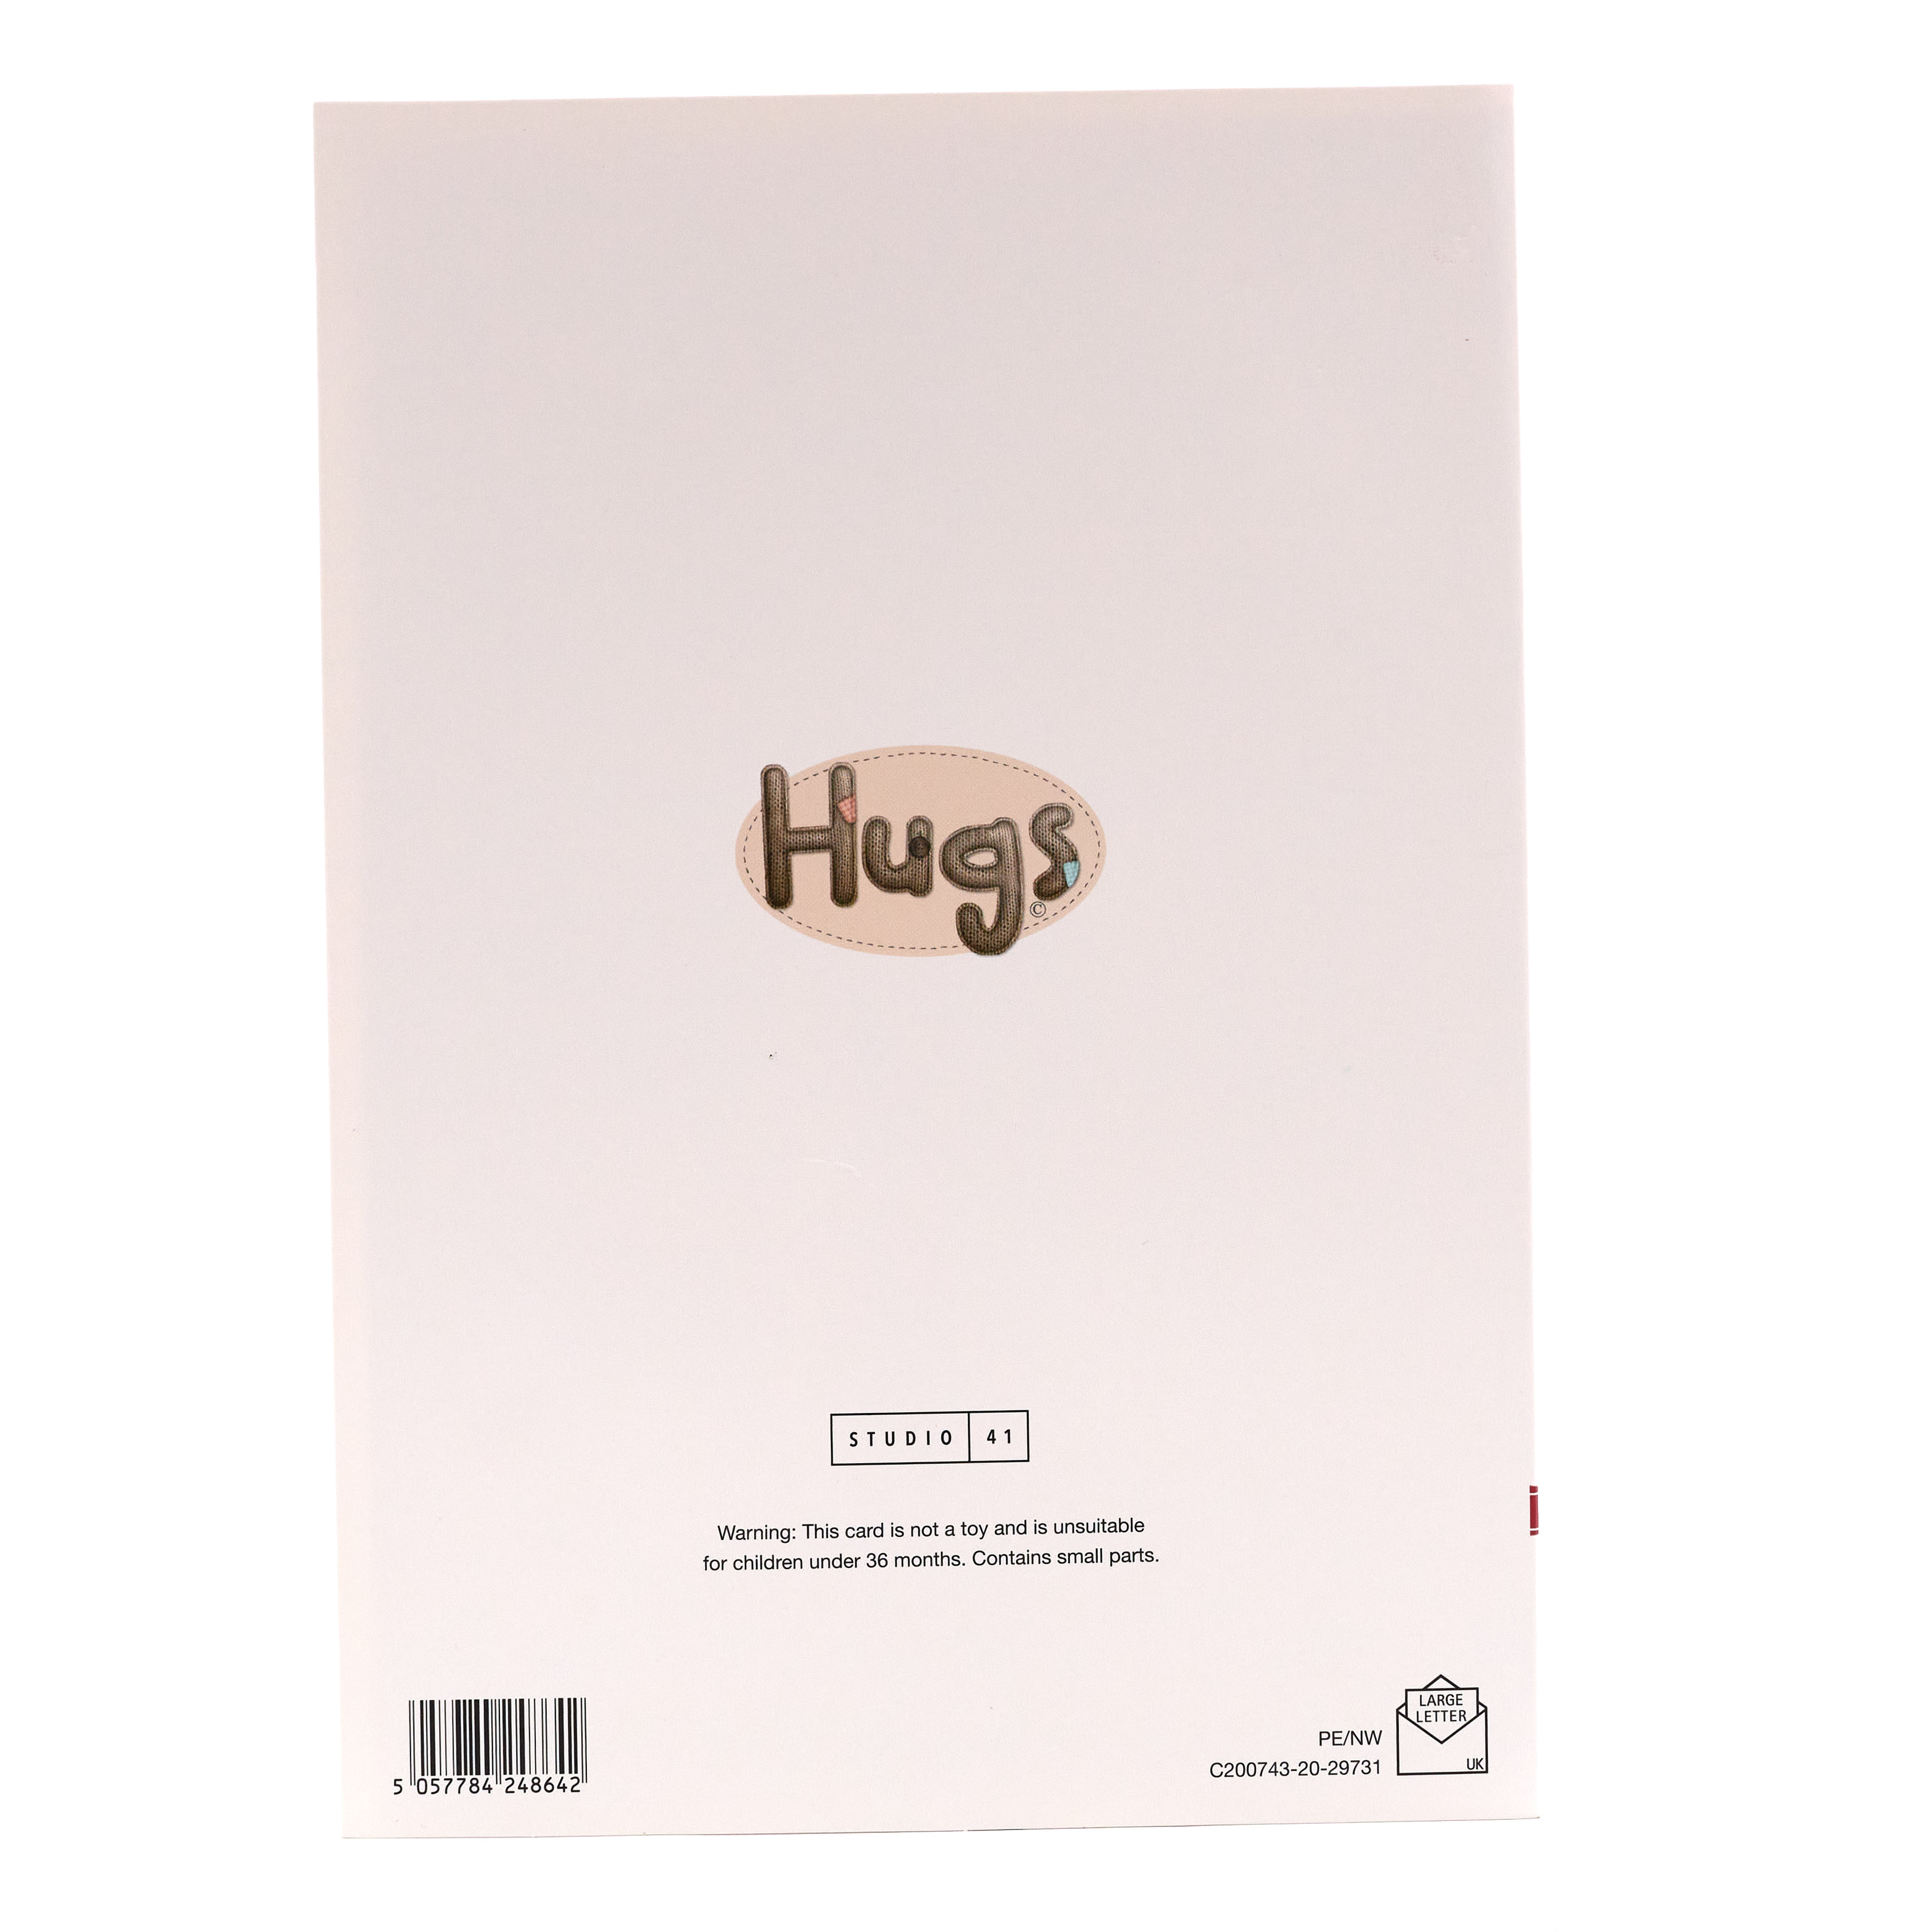 Hugs Bear Christmas Card - Sister And Boyfriend, Cute Bears With Hot Chocolate